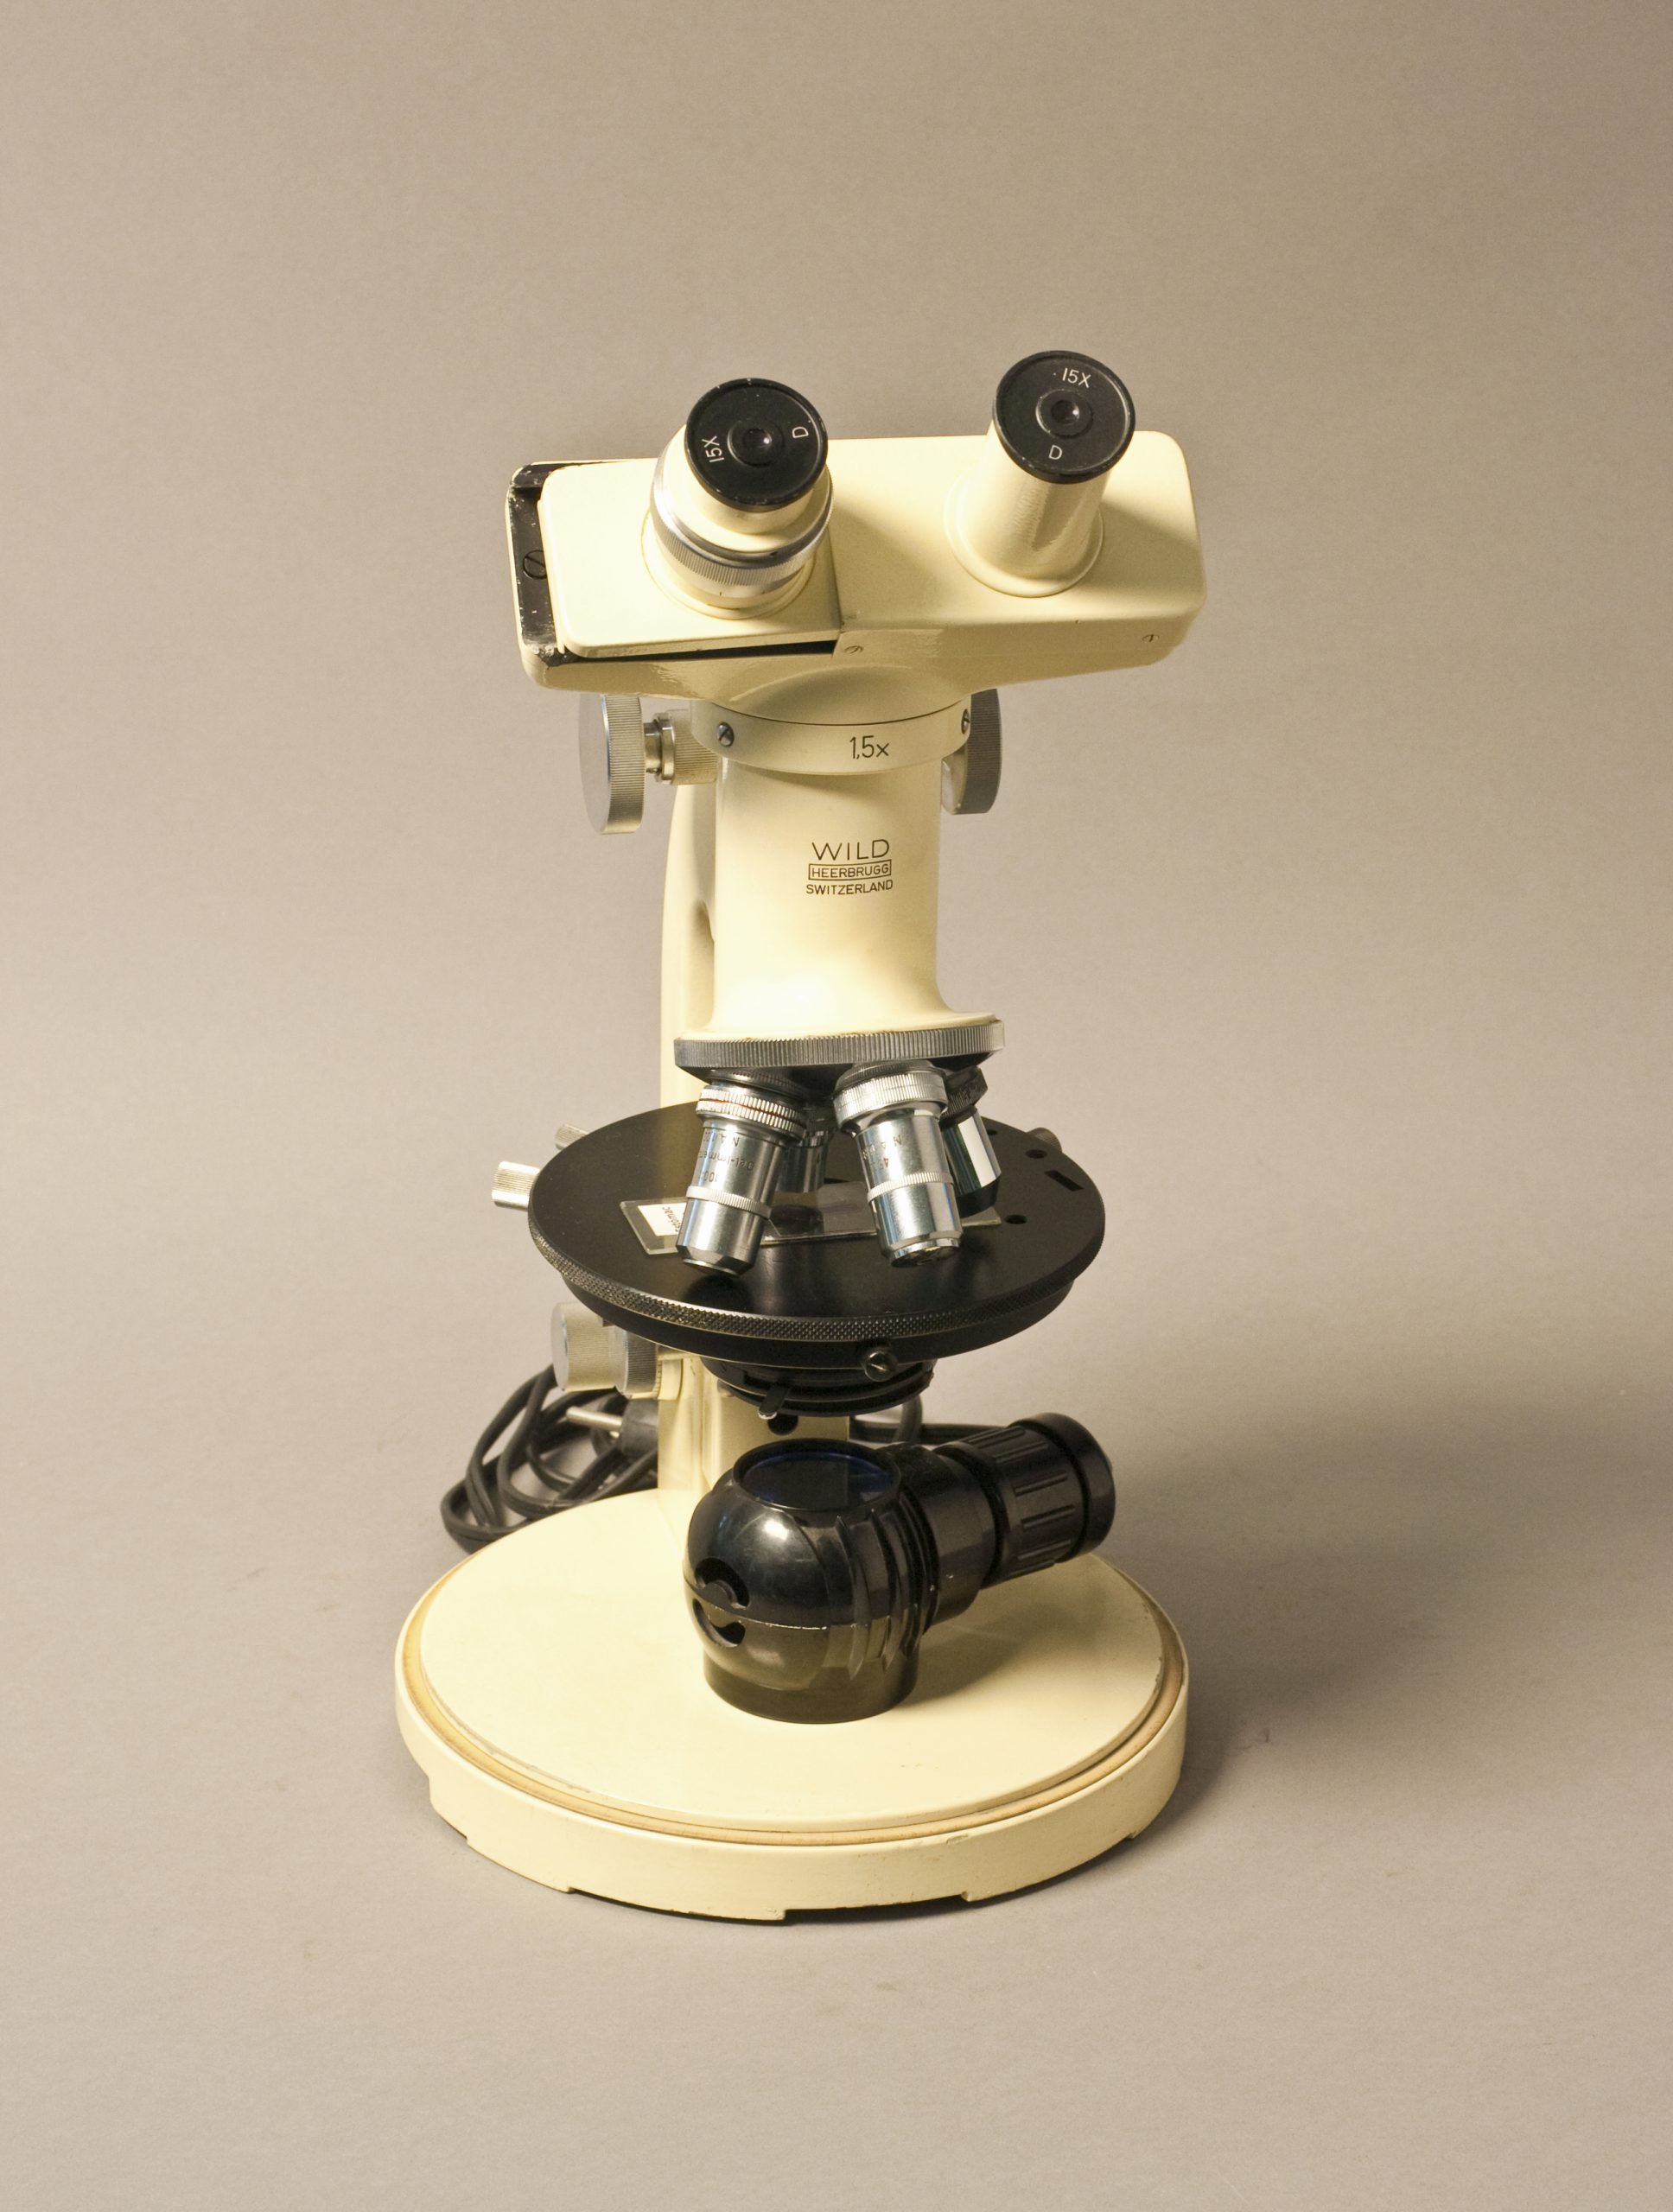 Microscopi binocular de la marca Wild